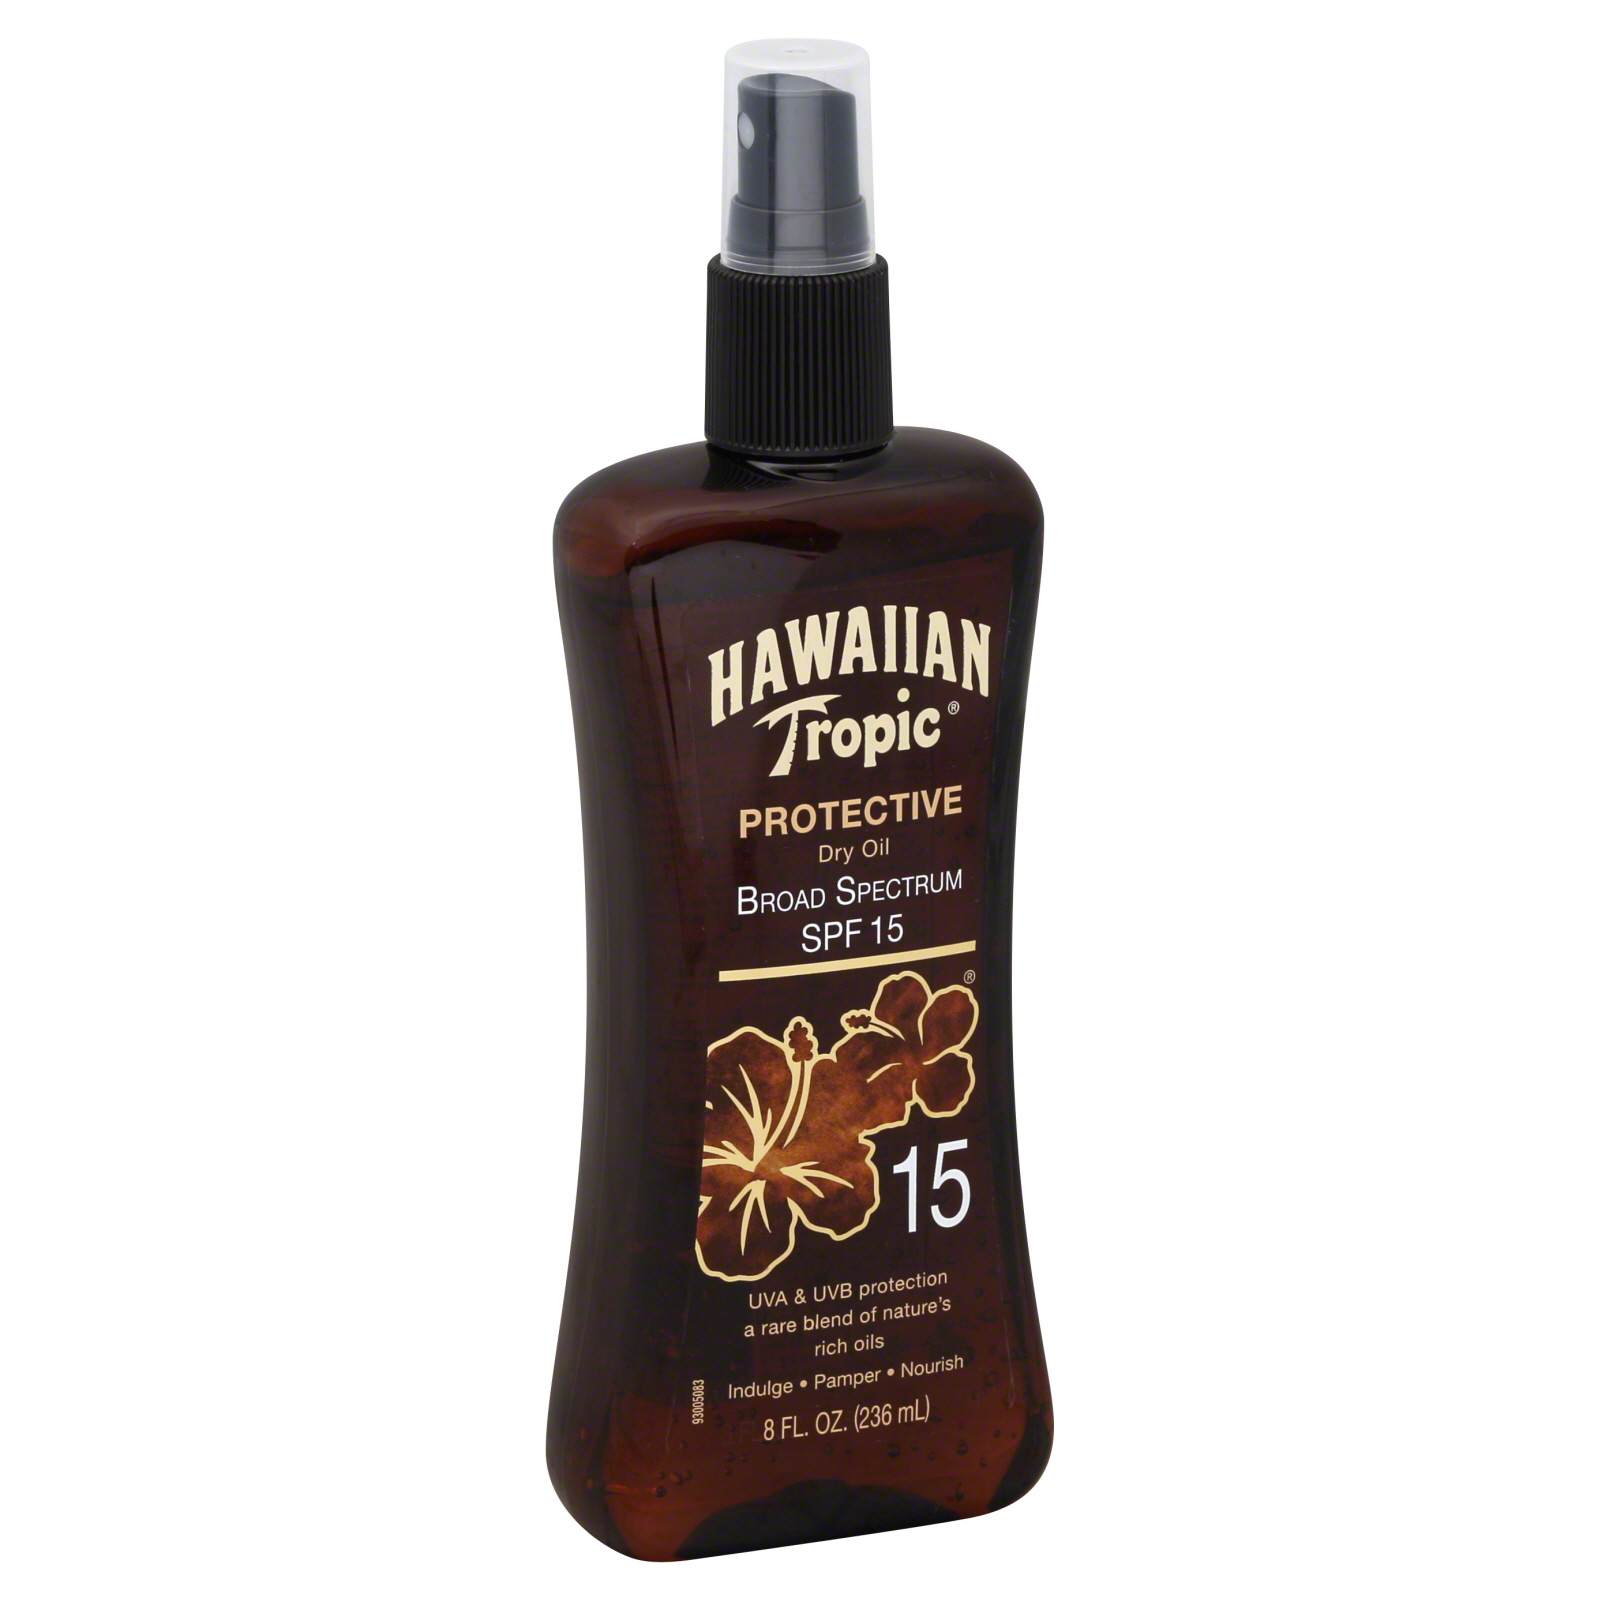 Hawaiian Tropic Protective Dry Oil Sunscreen, Spray Pump, SPF 15, 8 fl oz